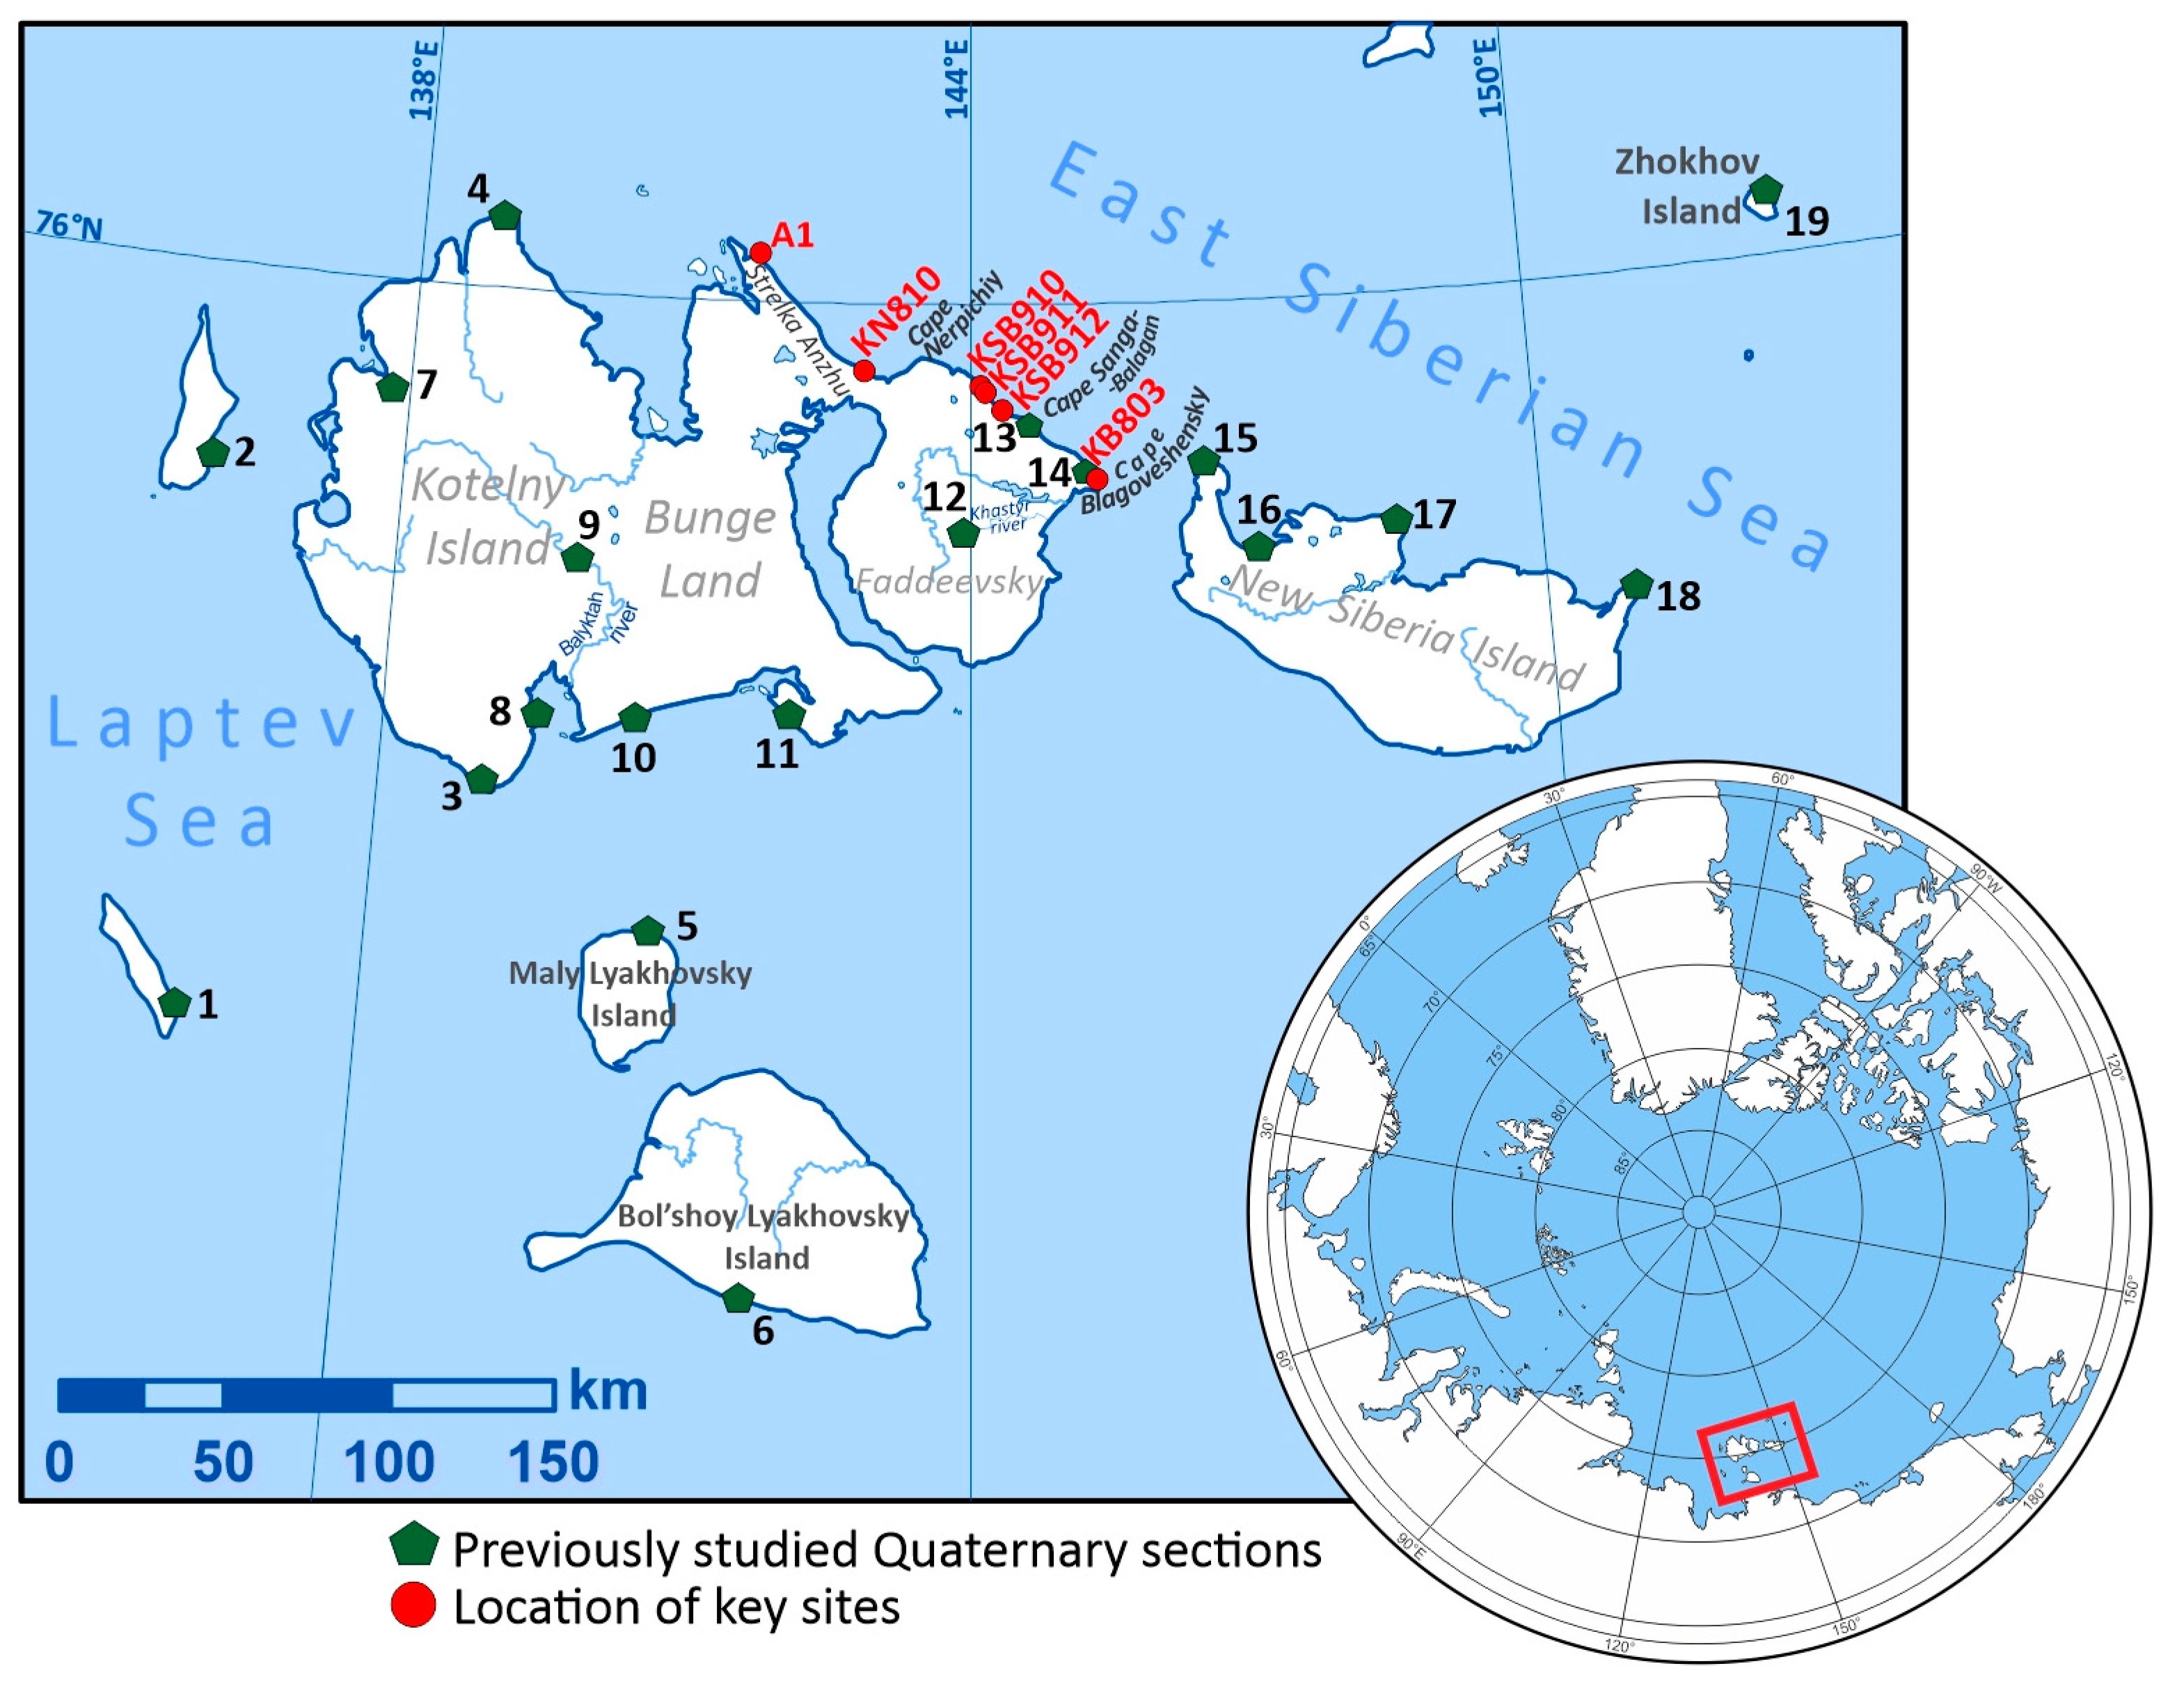 new siberian islands map